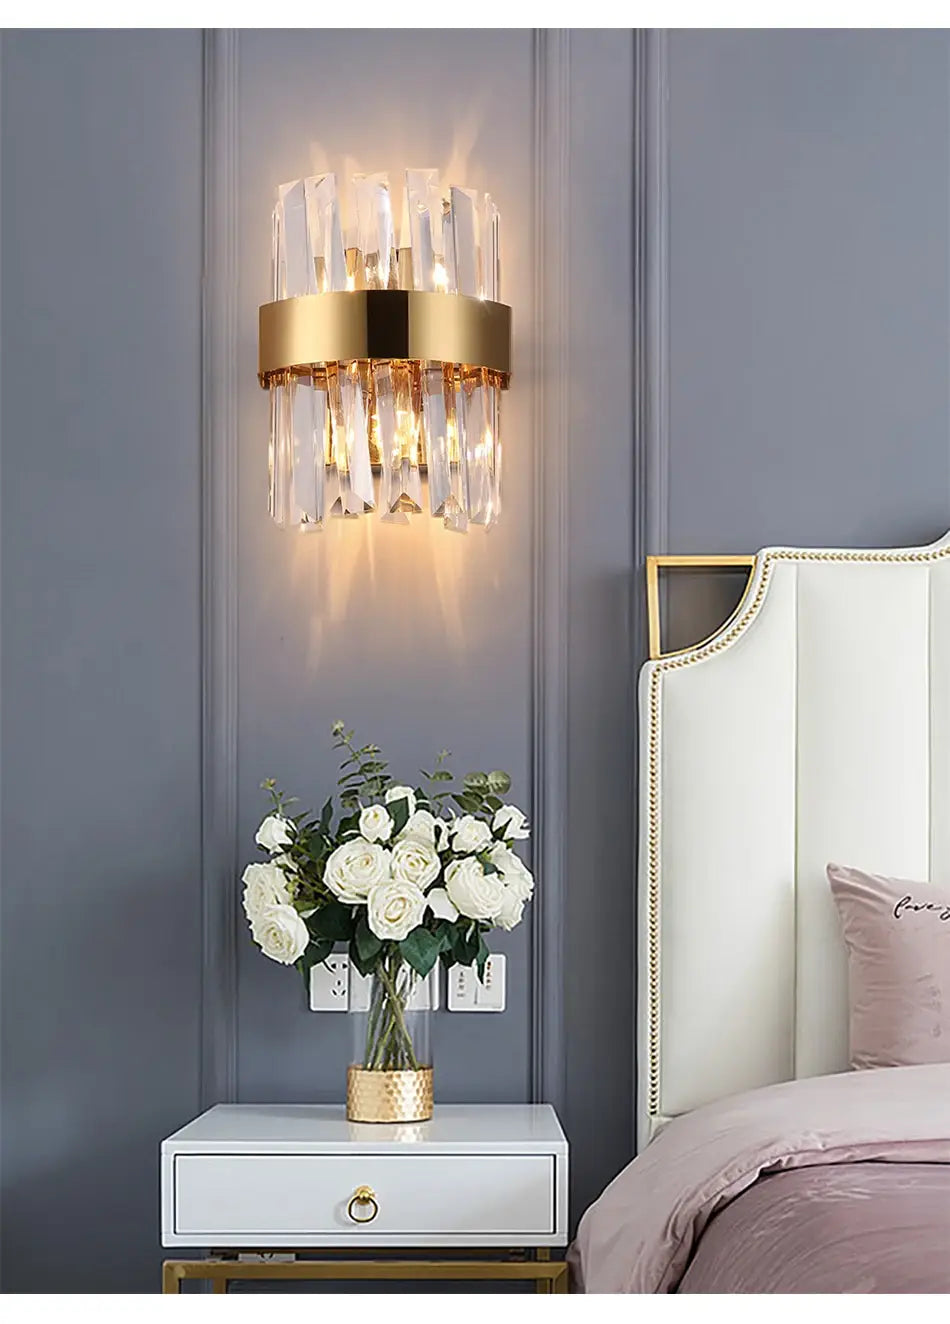 Luxury Modern Crystal Wall Sconce for Bedside, Bedroom, Hallway